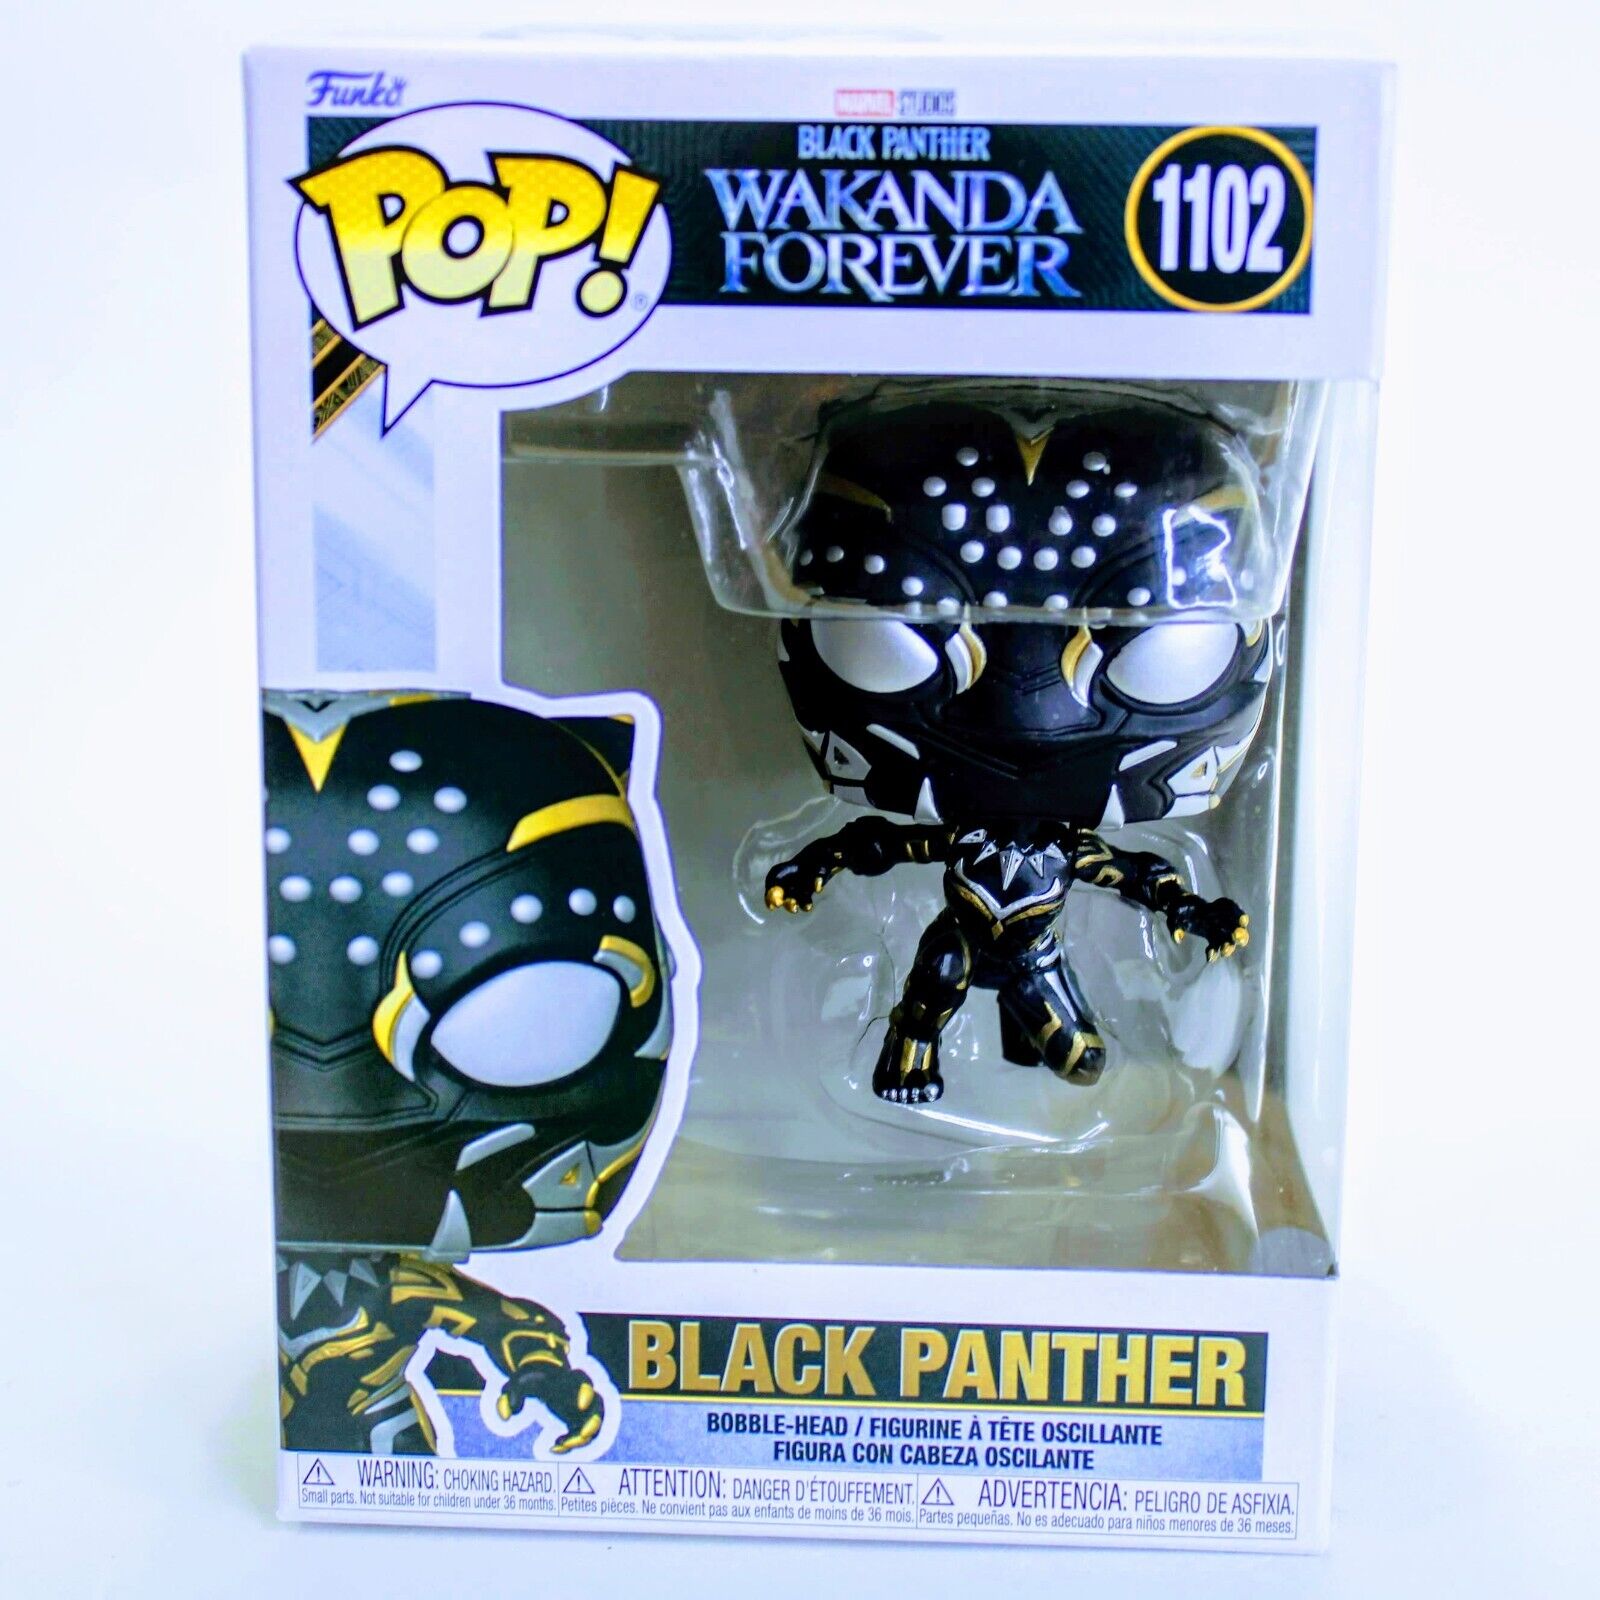 Funko Pop Marvel: Black Panther Wakanda Forever - Black Panther Figure 1102